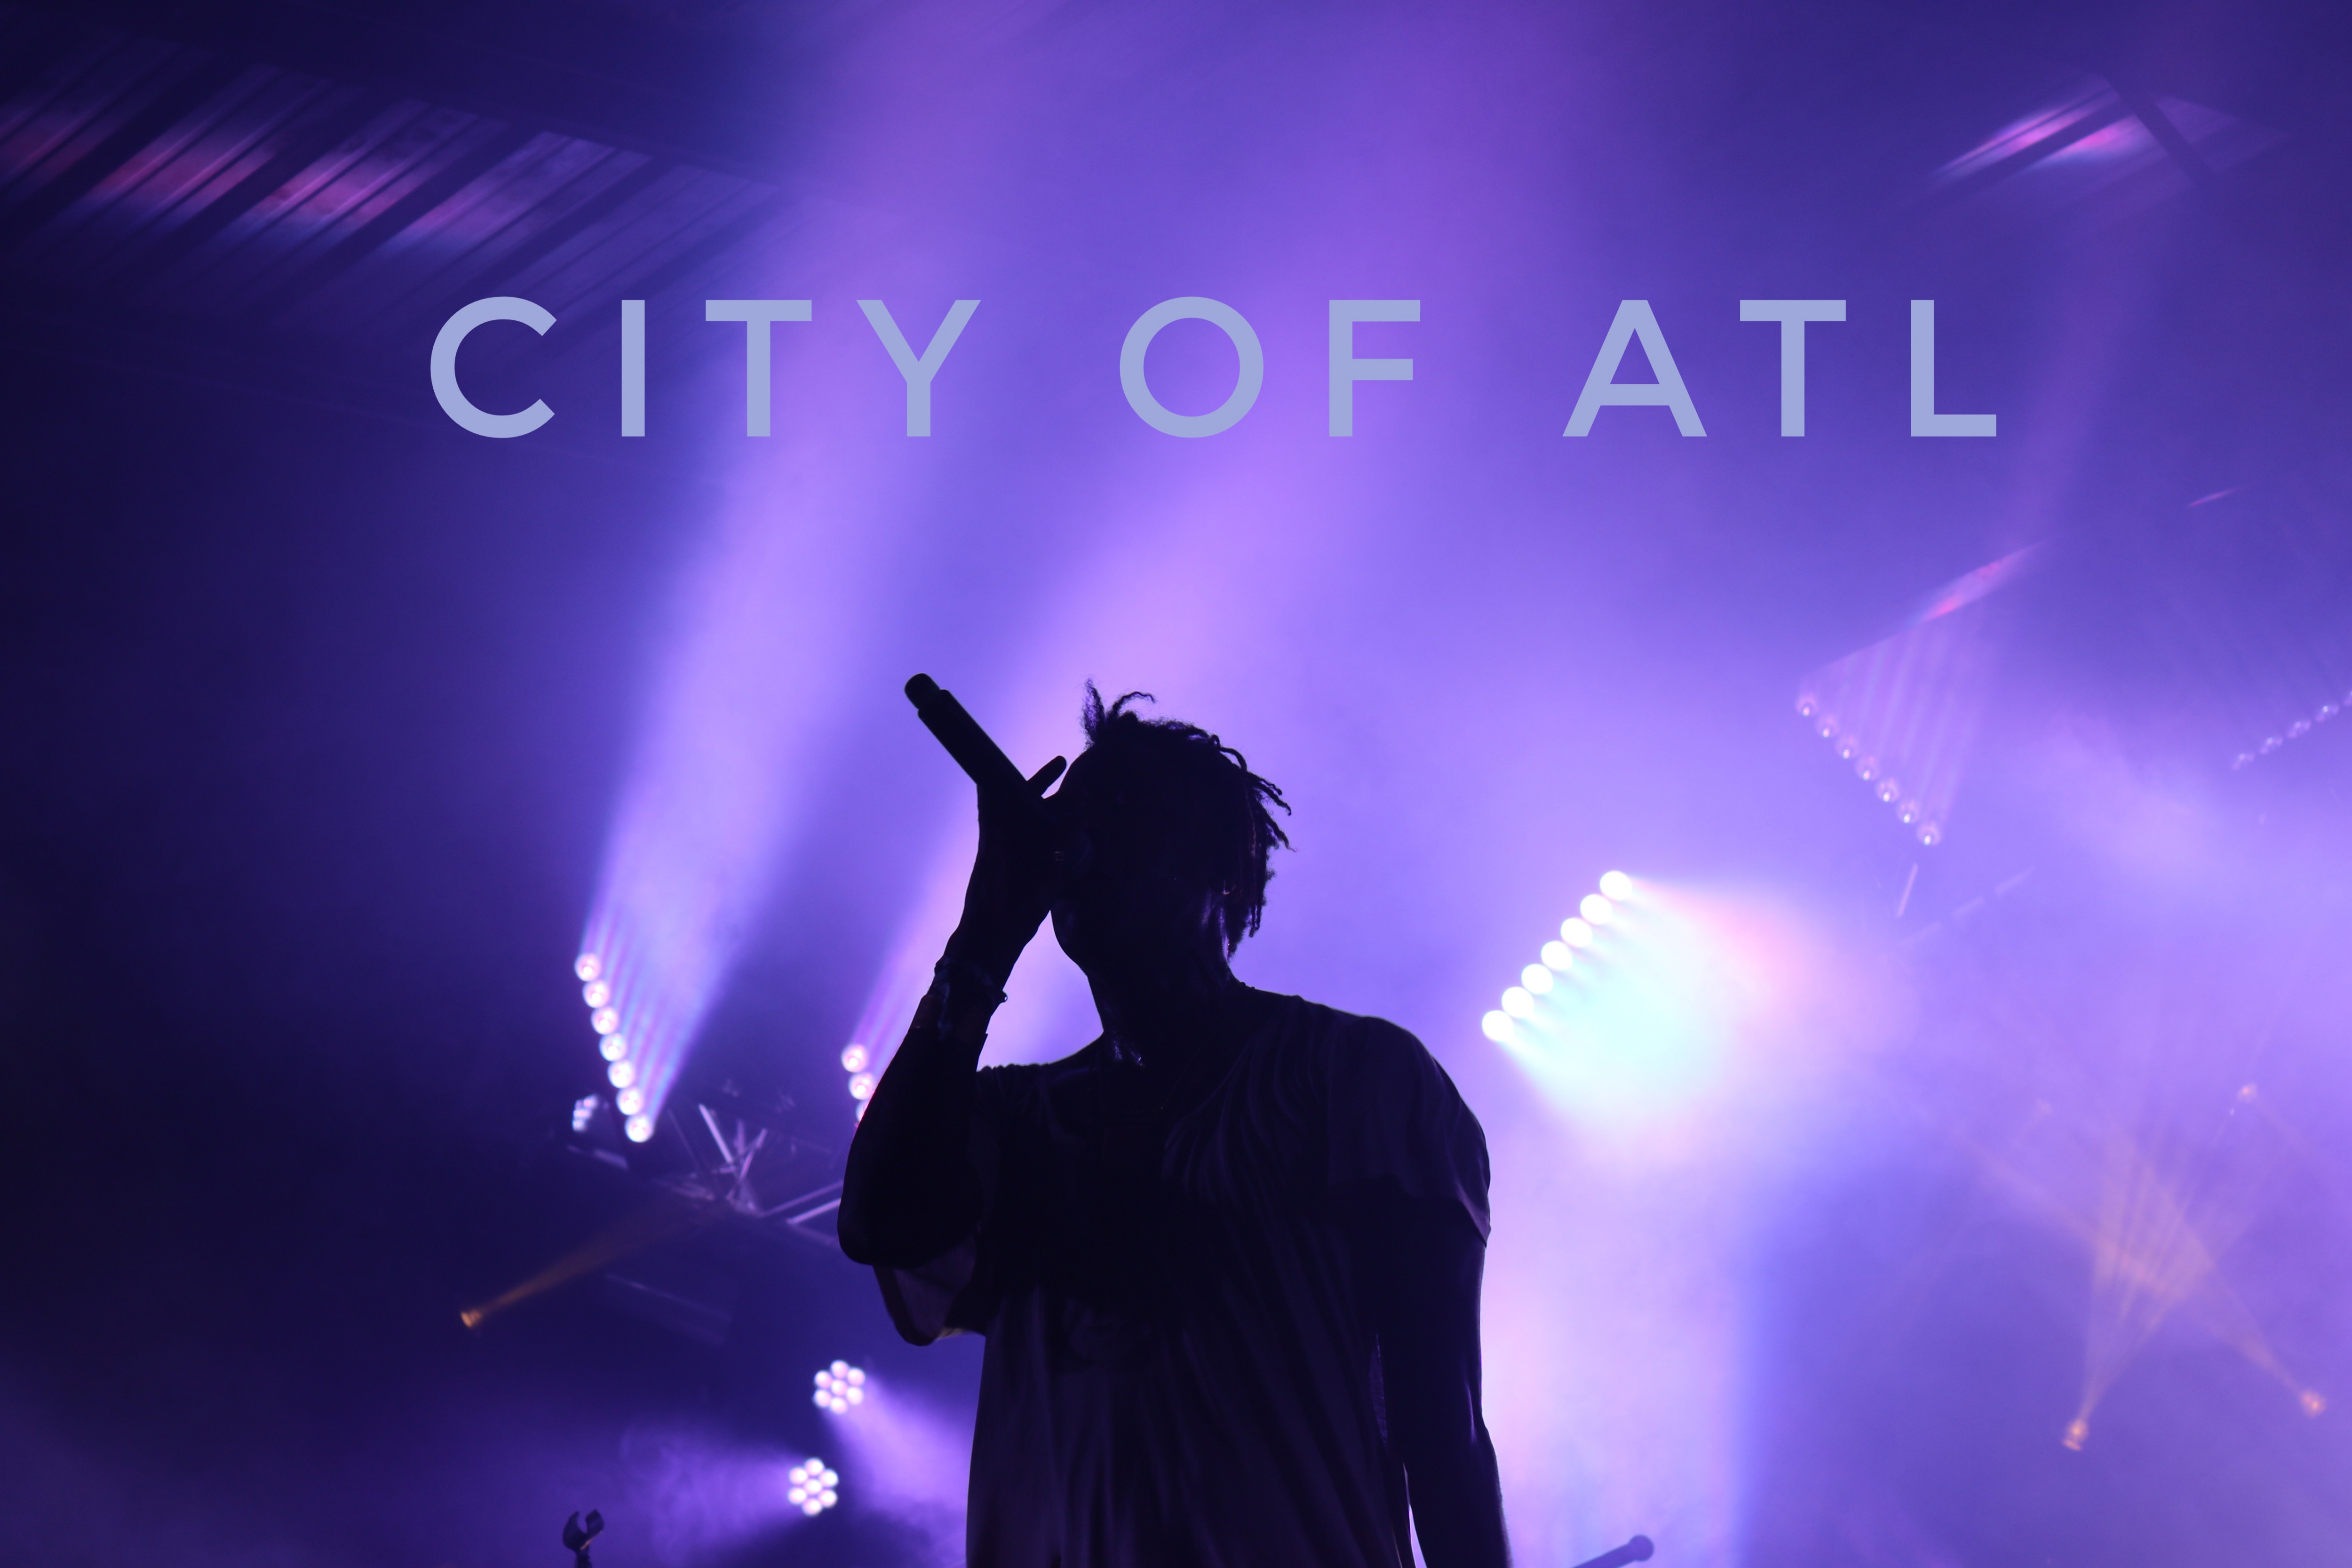 City of ATL